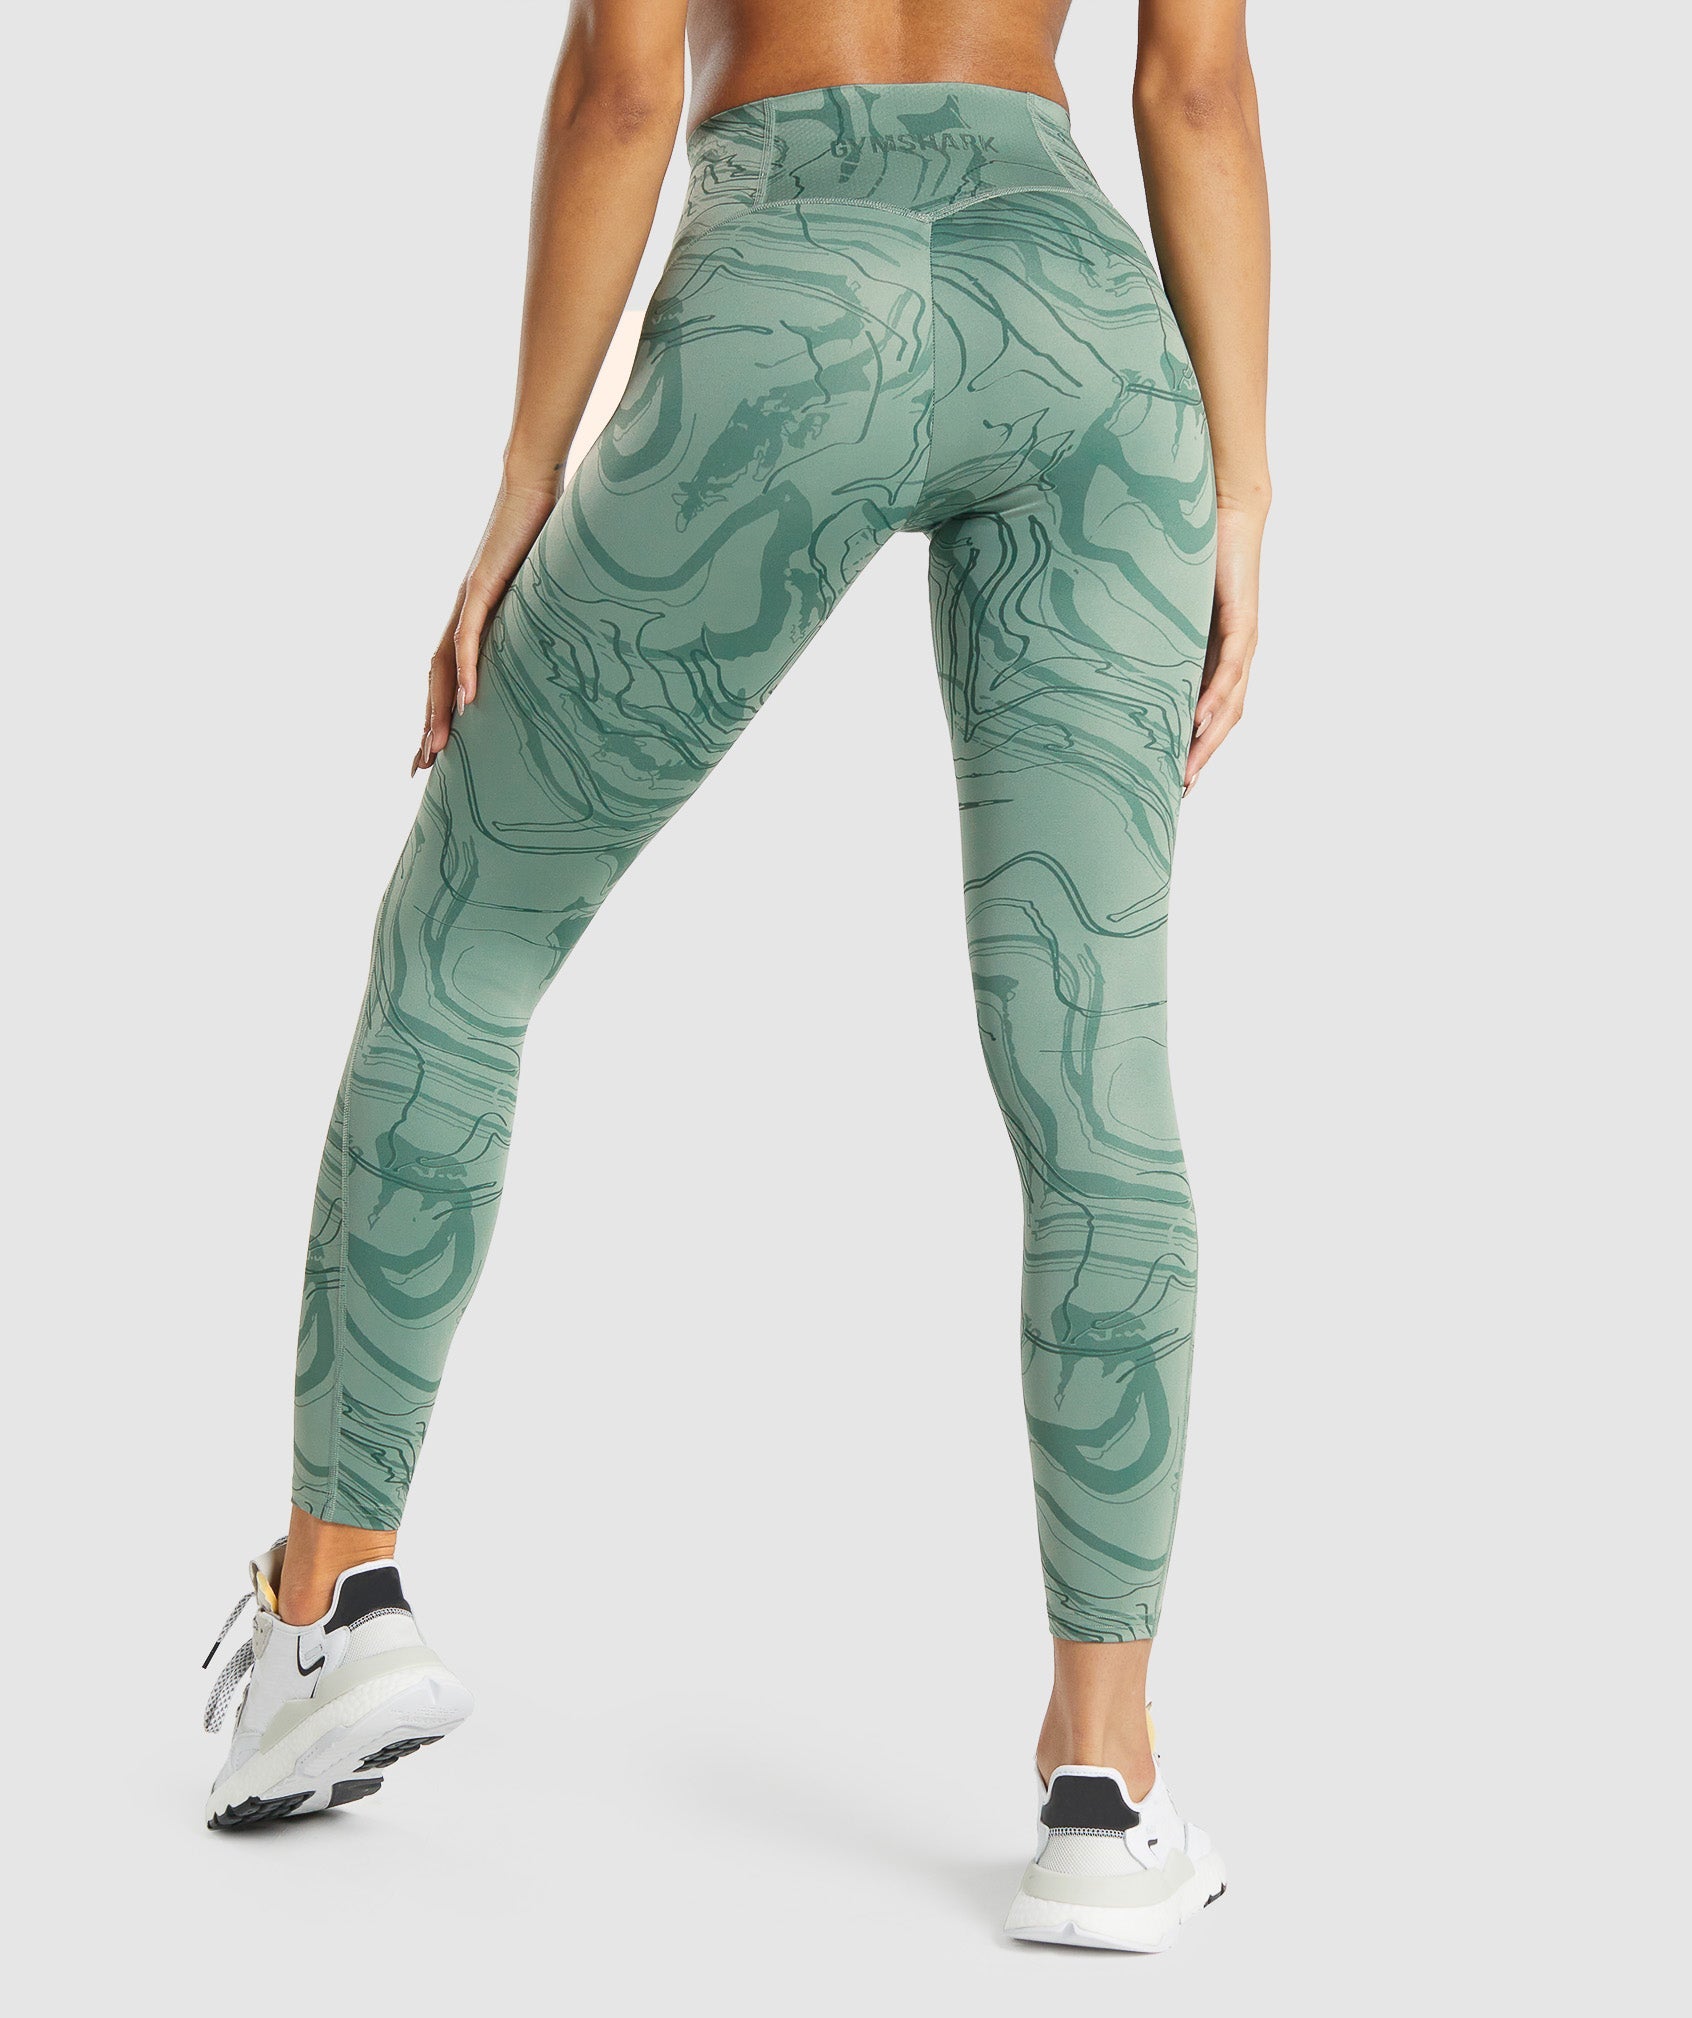 Buy Gymshark women sportwear fit graphic print pull on legging